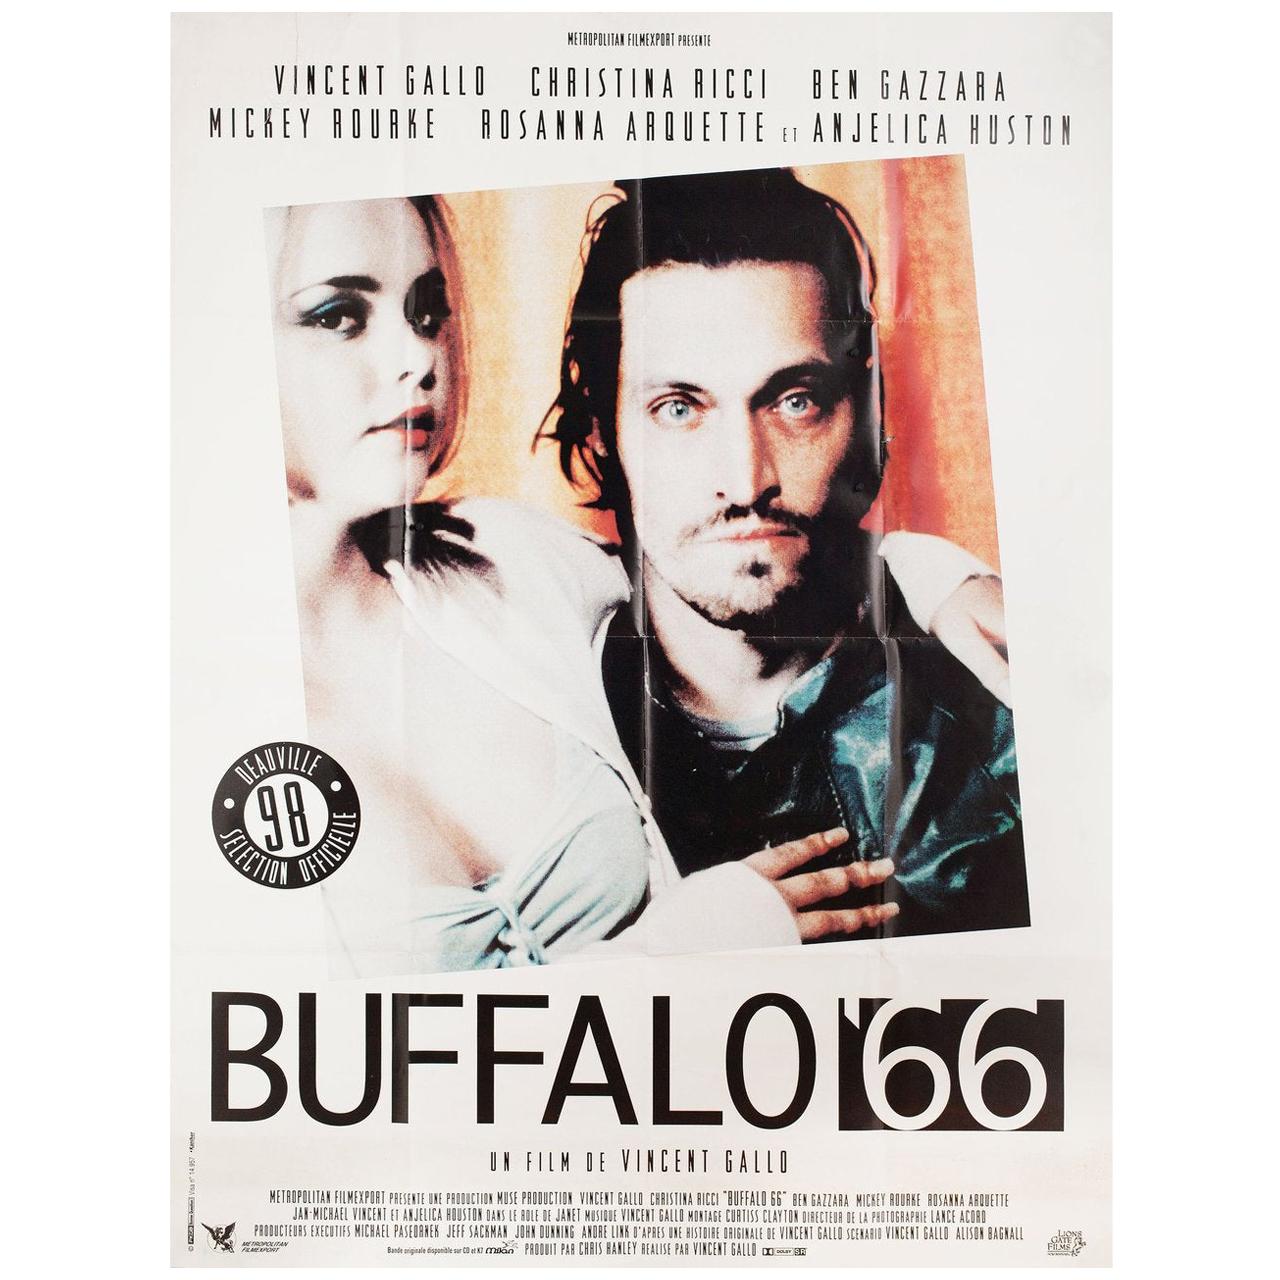 'Buffalo' '66 1998 French Grande Film Poster